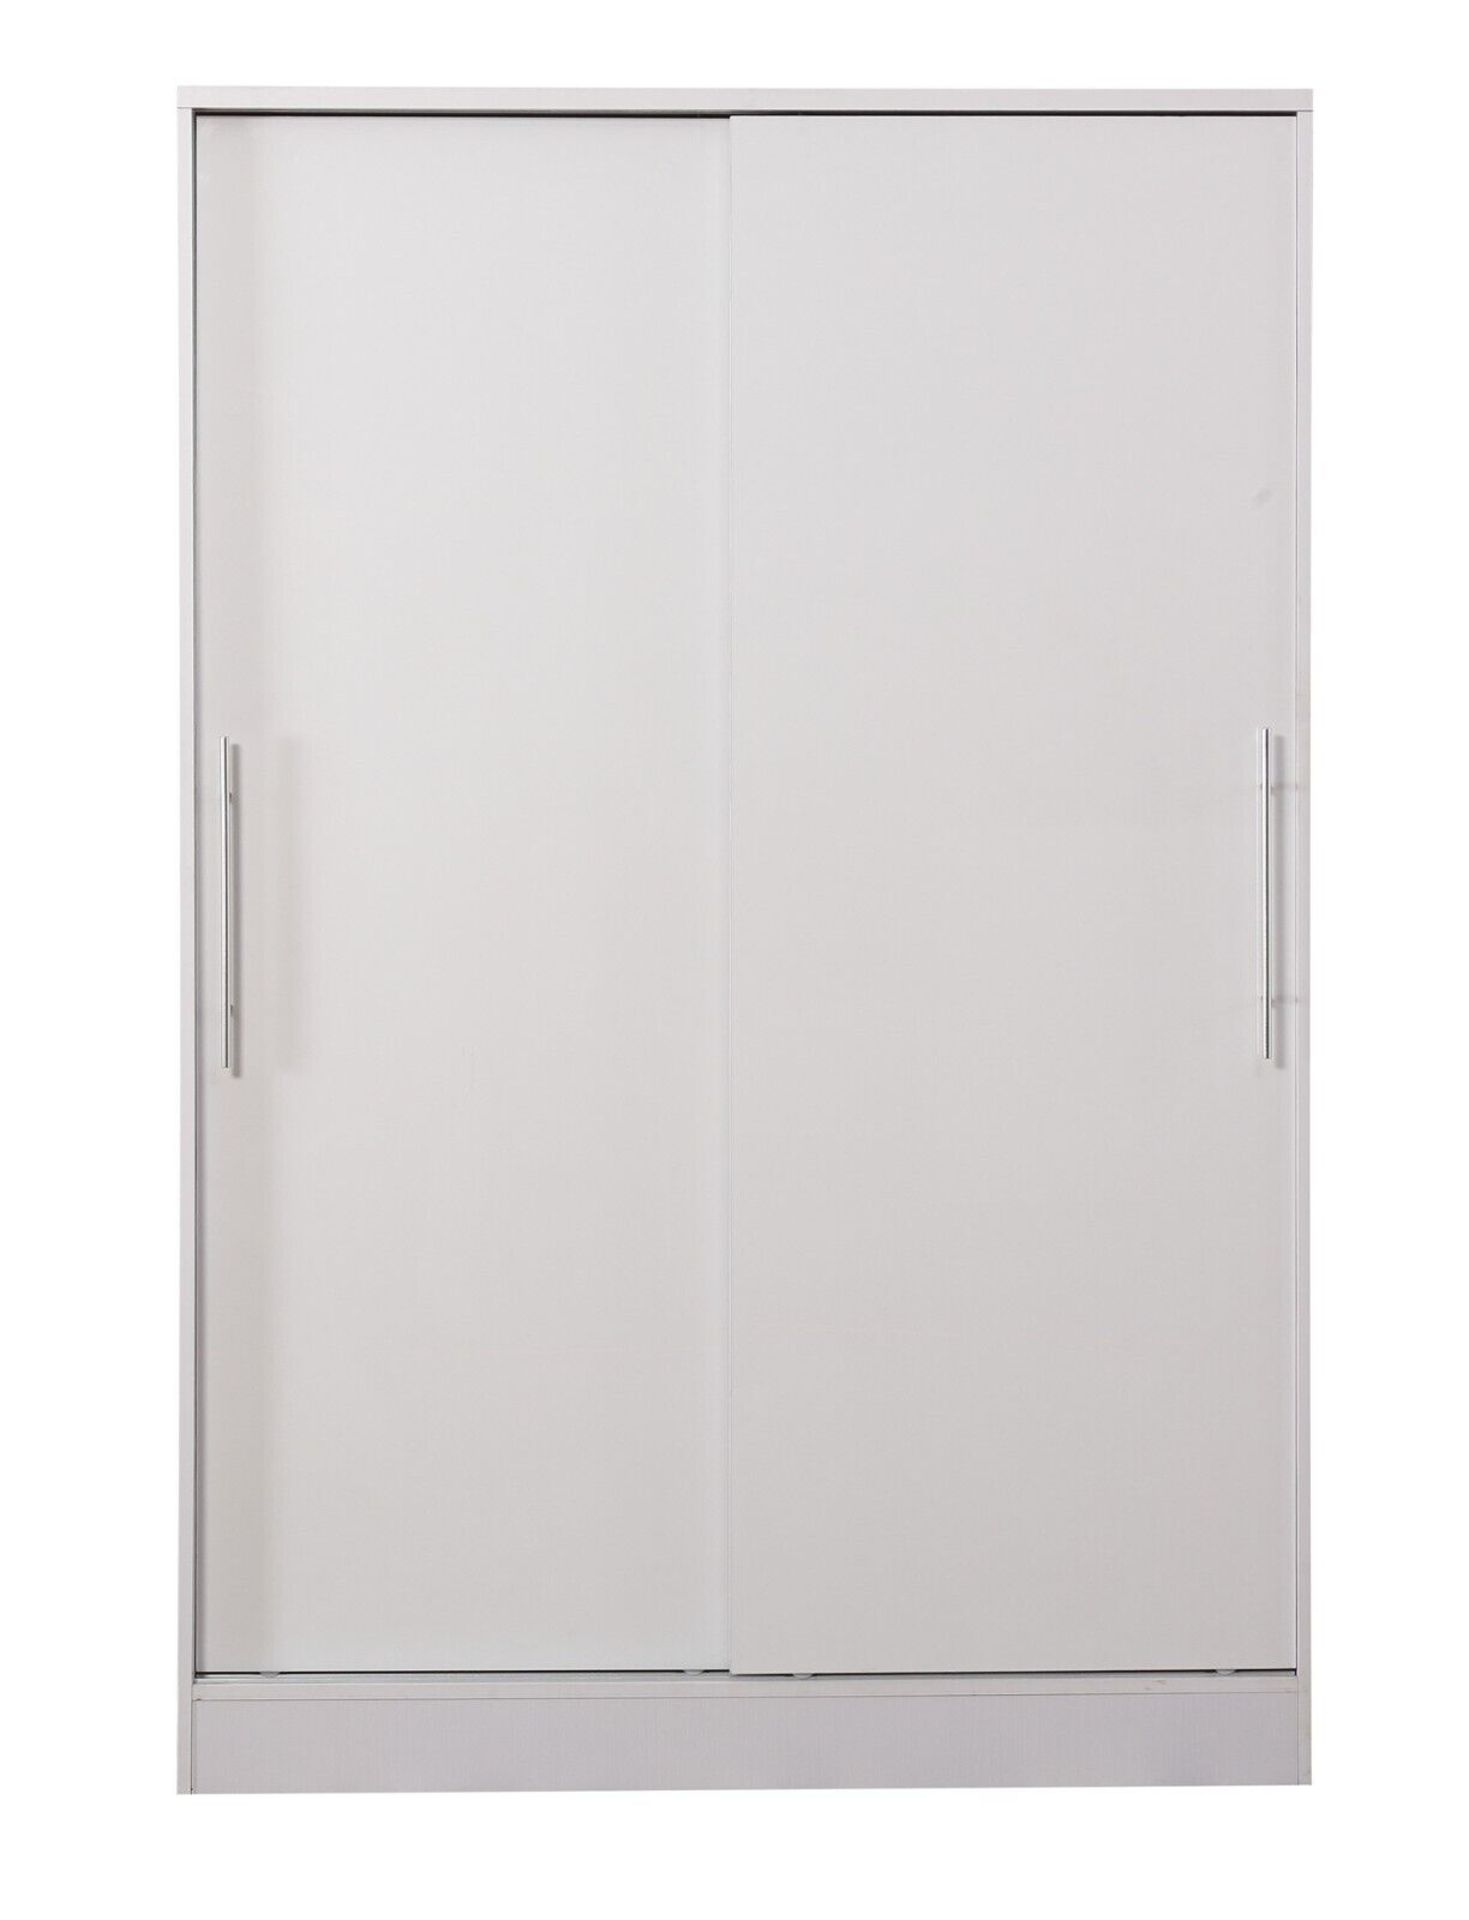 2 DOOR SLIDING WARDROBE XL HIGH GLOSS BEDROOM FURNITURE WHITE ON WHITE - Image 7 of 8